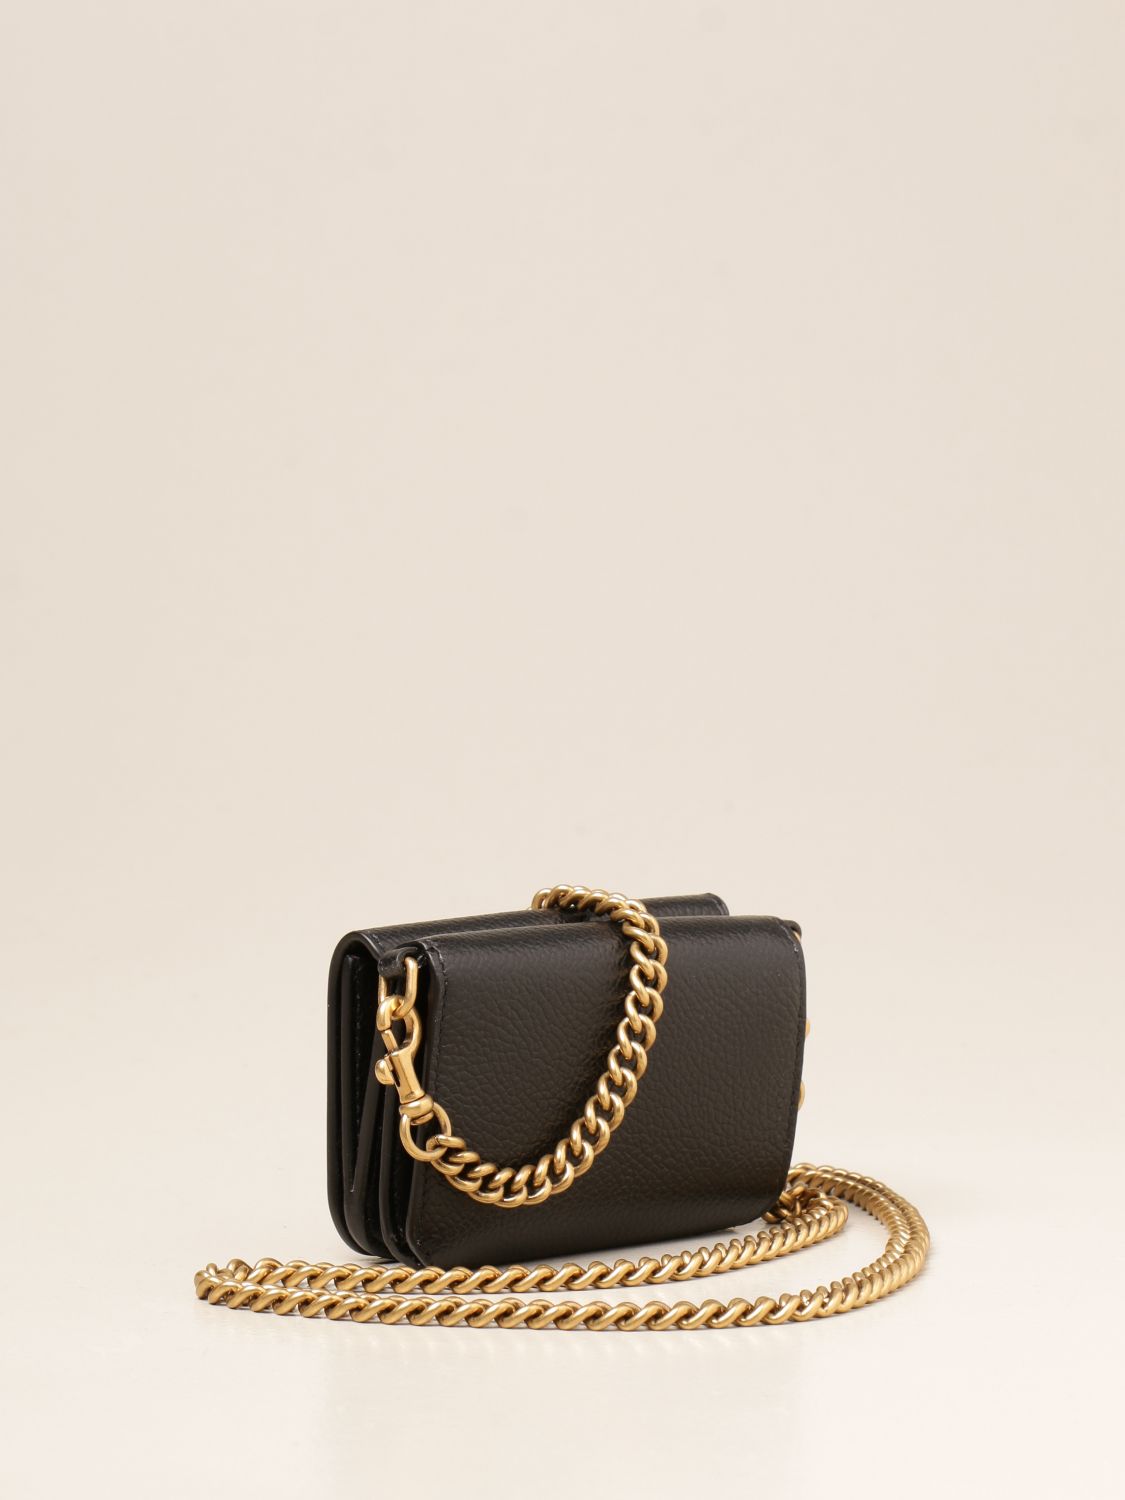 Balenciaga Black Cash Mini Crossbody Bag